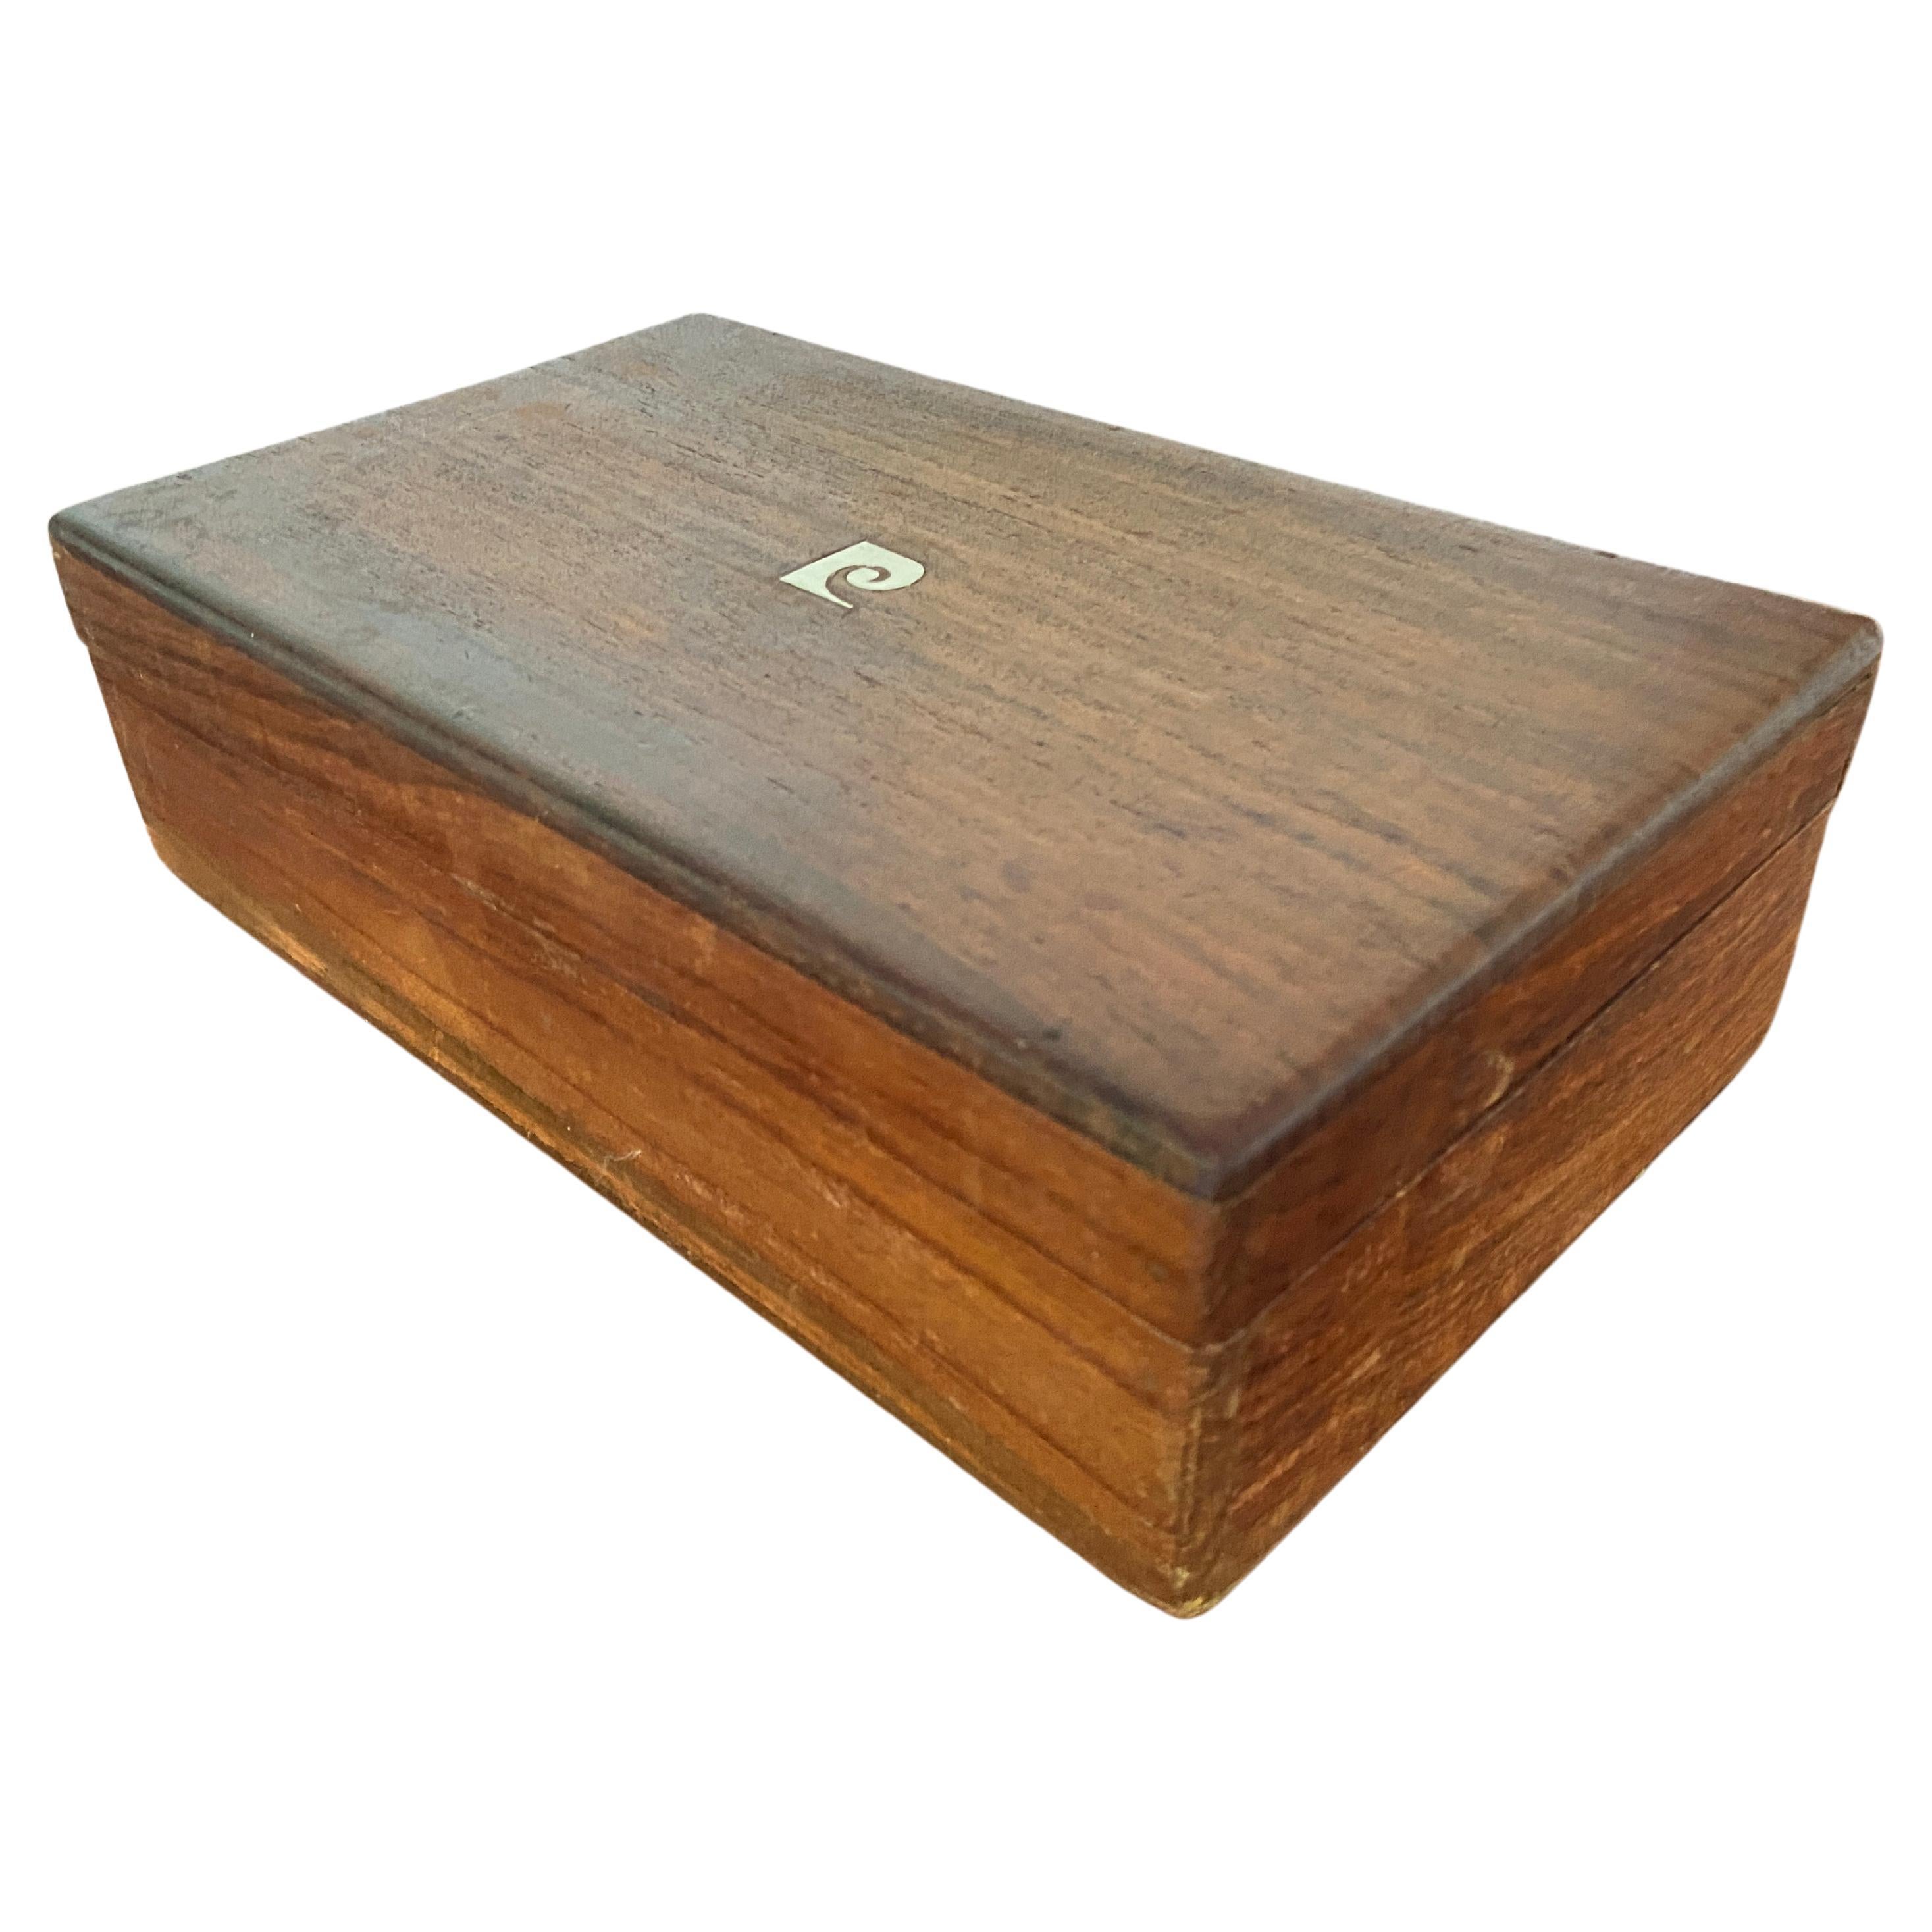 Pierre Cardin Rosewood Jewelry Box